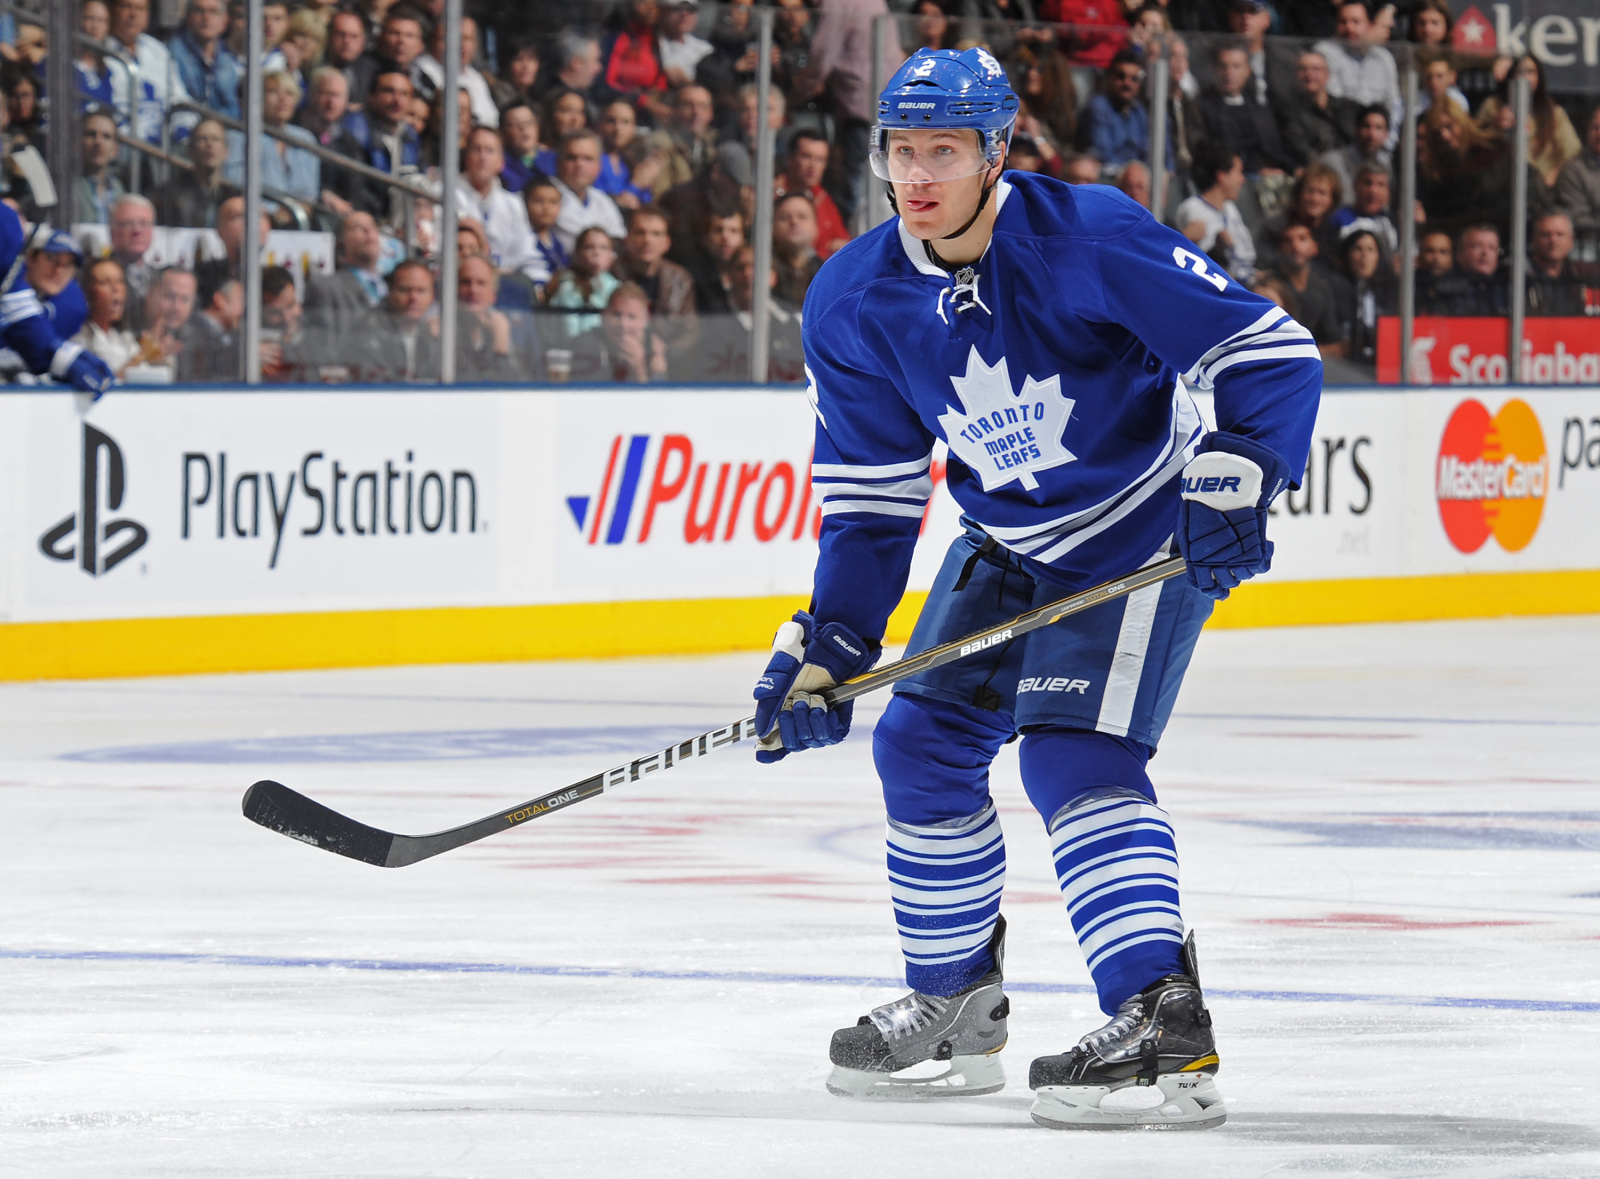 Luke Schenn brings missing edge to Maple Leafs D-Core